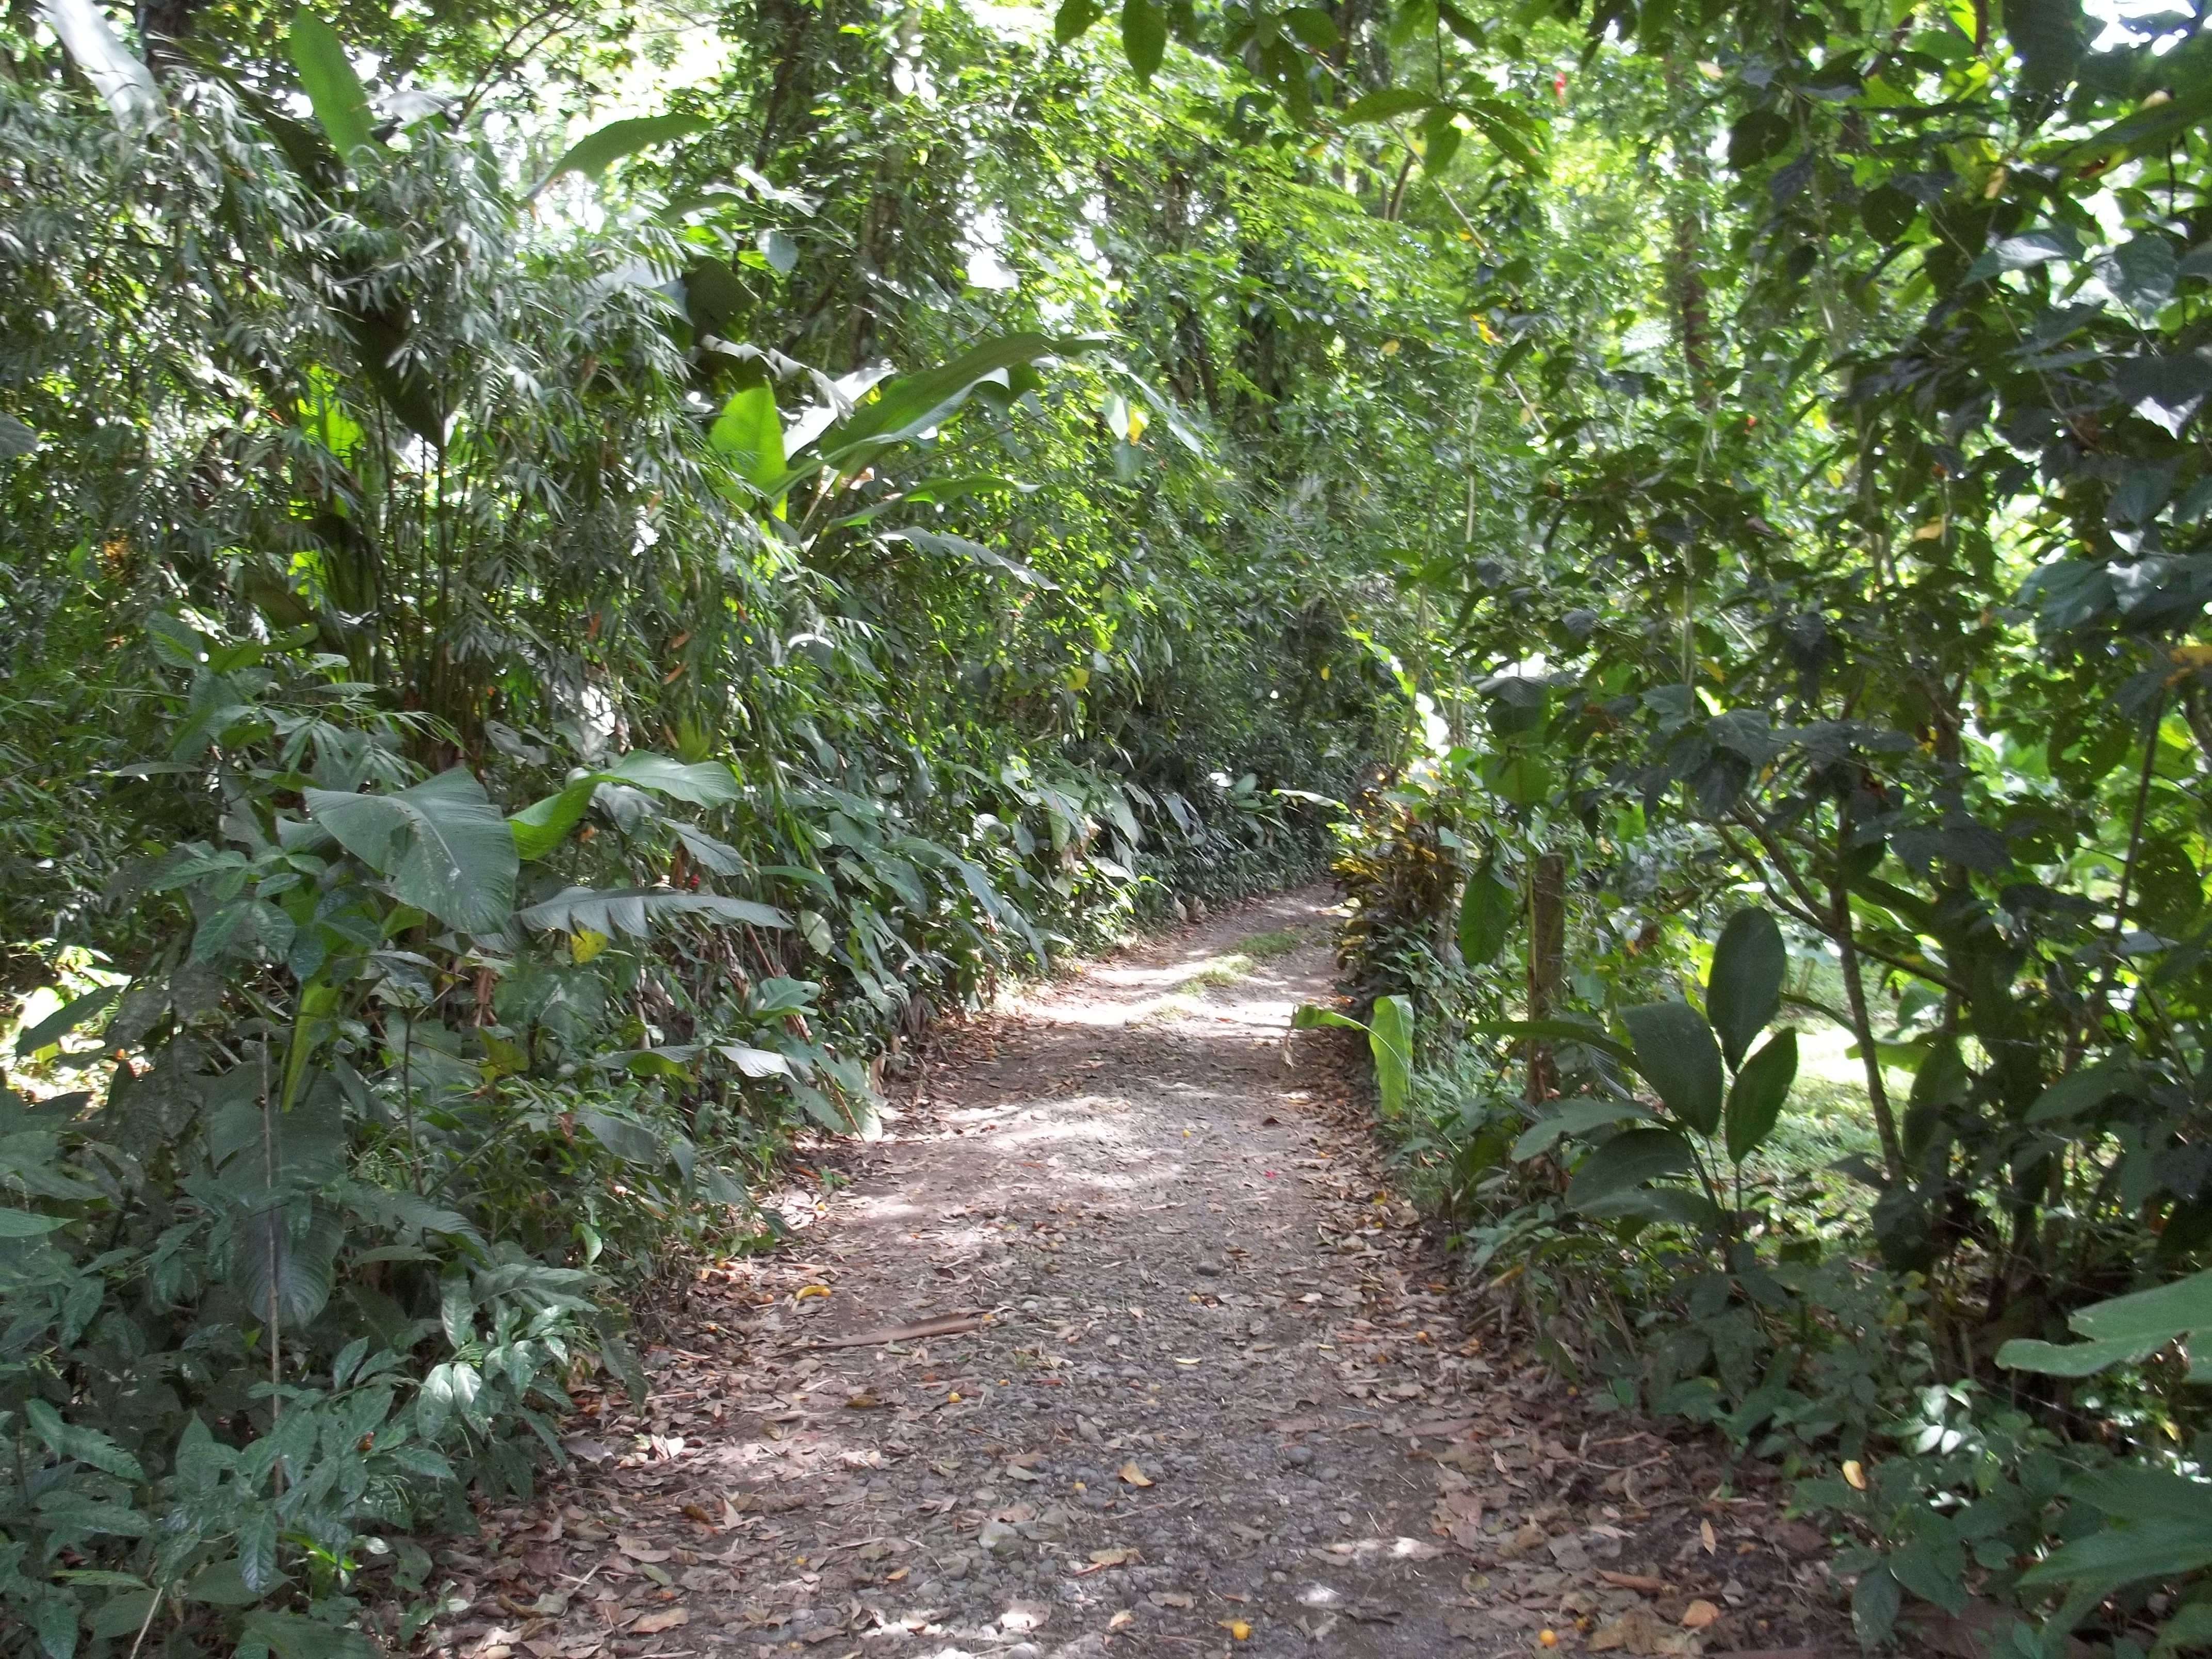 Jungle path